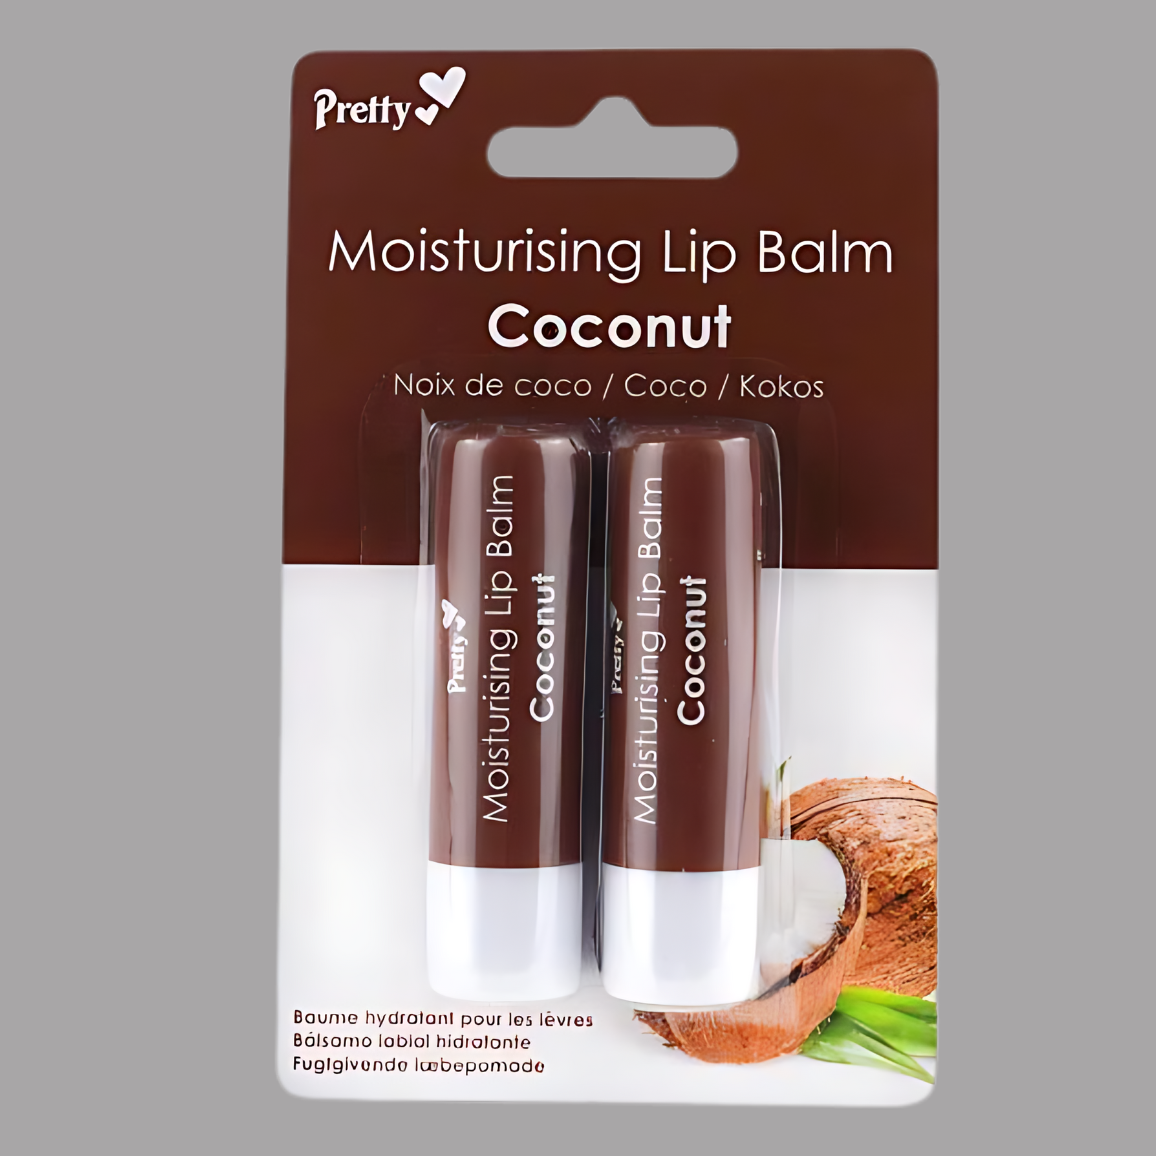 Pretty Moisturising Lip Balm Coconut 2 pack